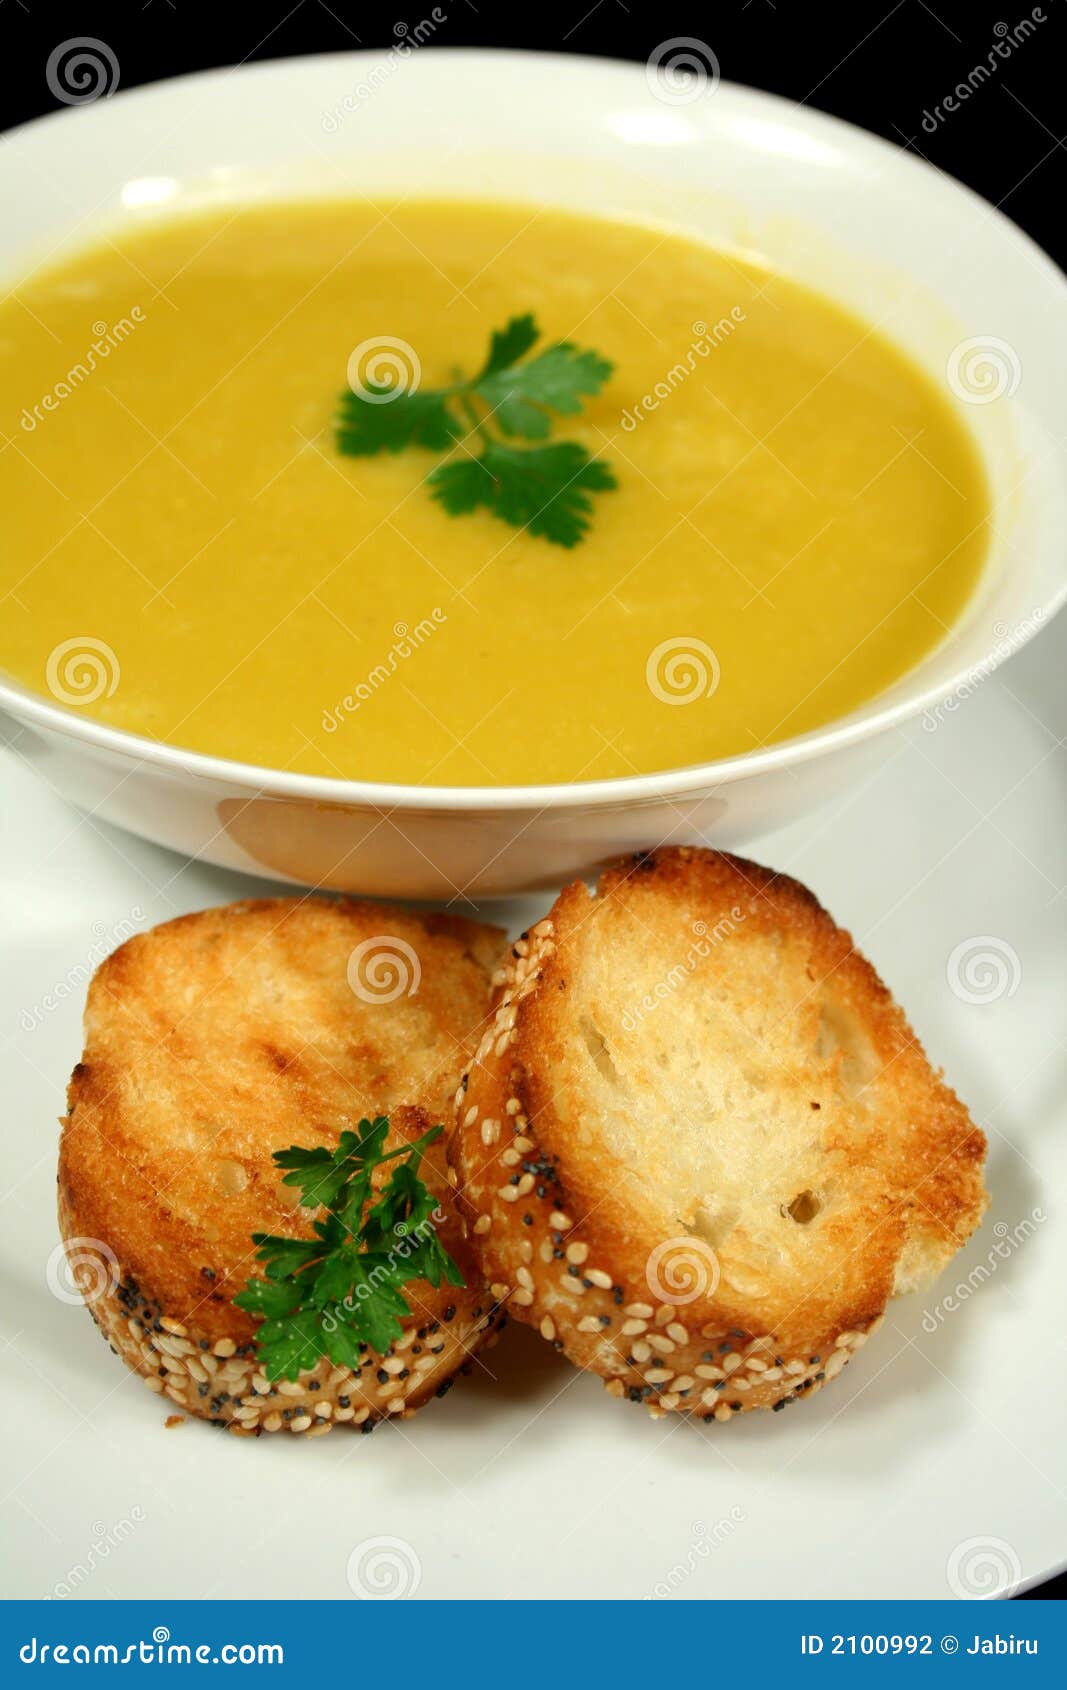 Pumpkin Soup With Garlic Bread Stock Photo - Image: 2100992